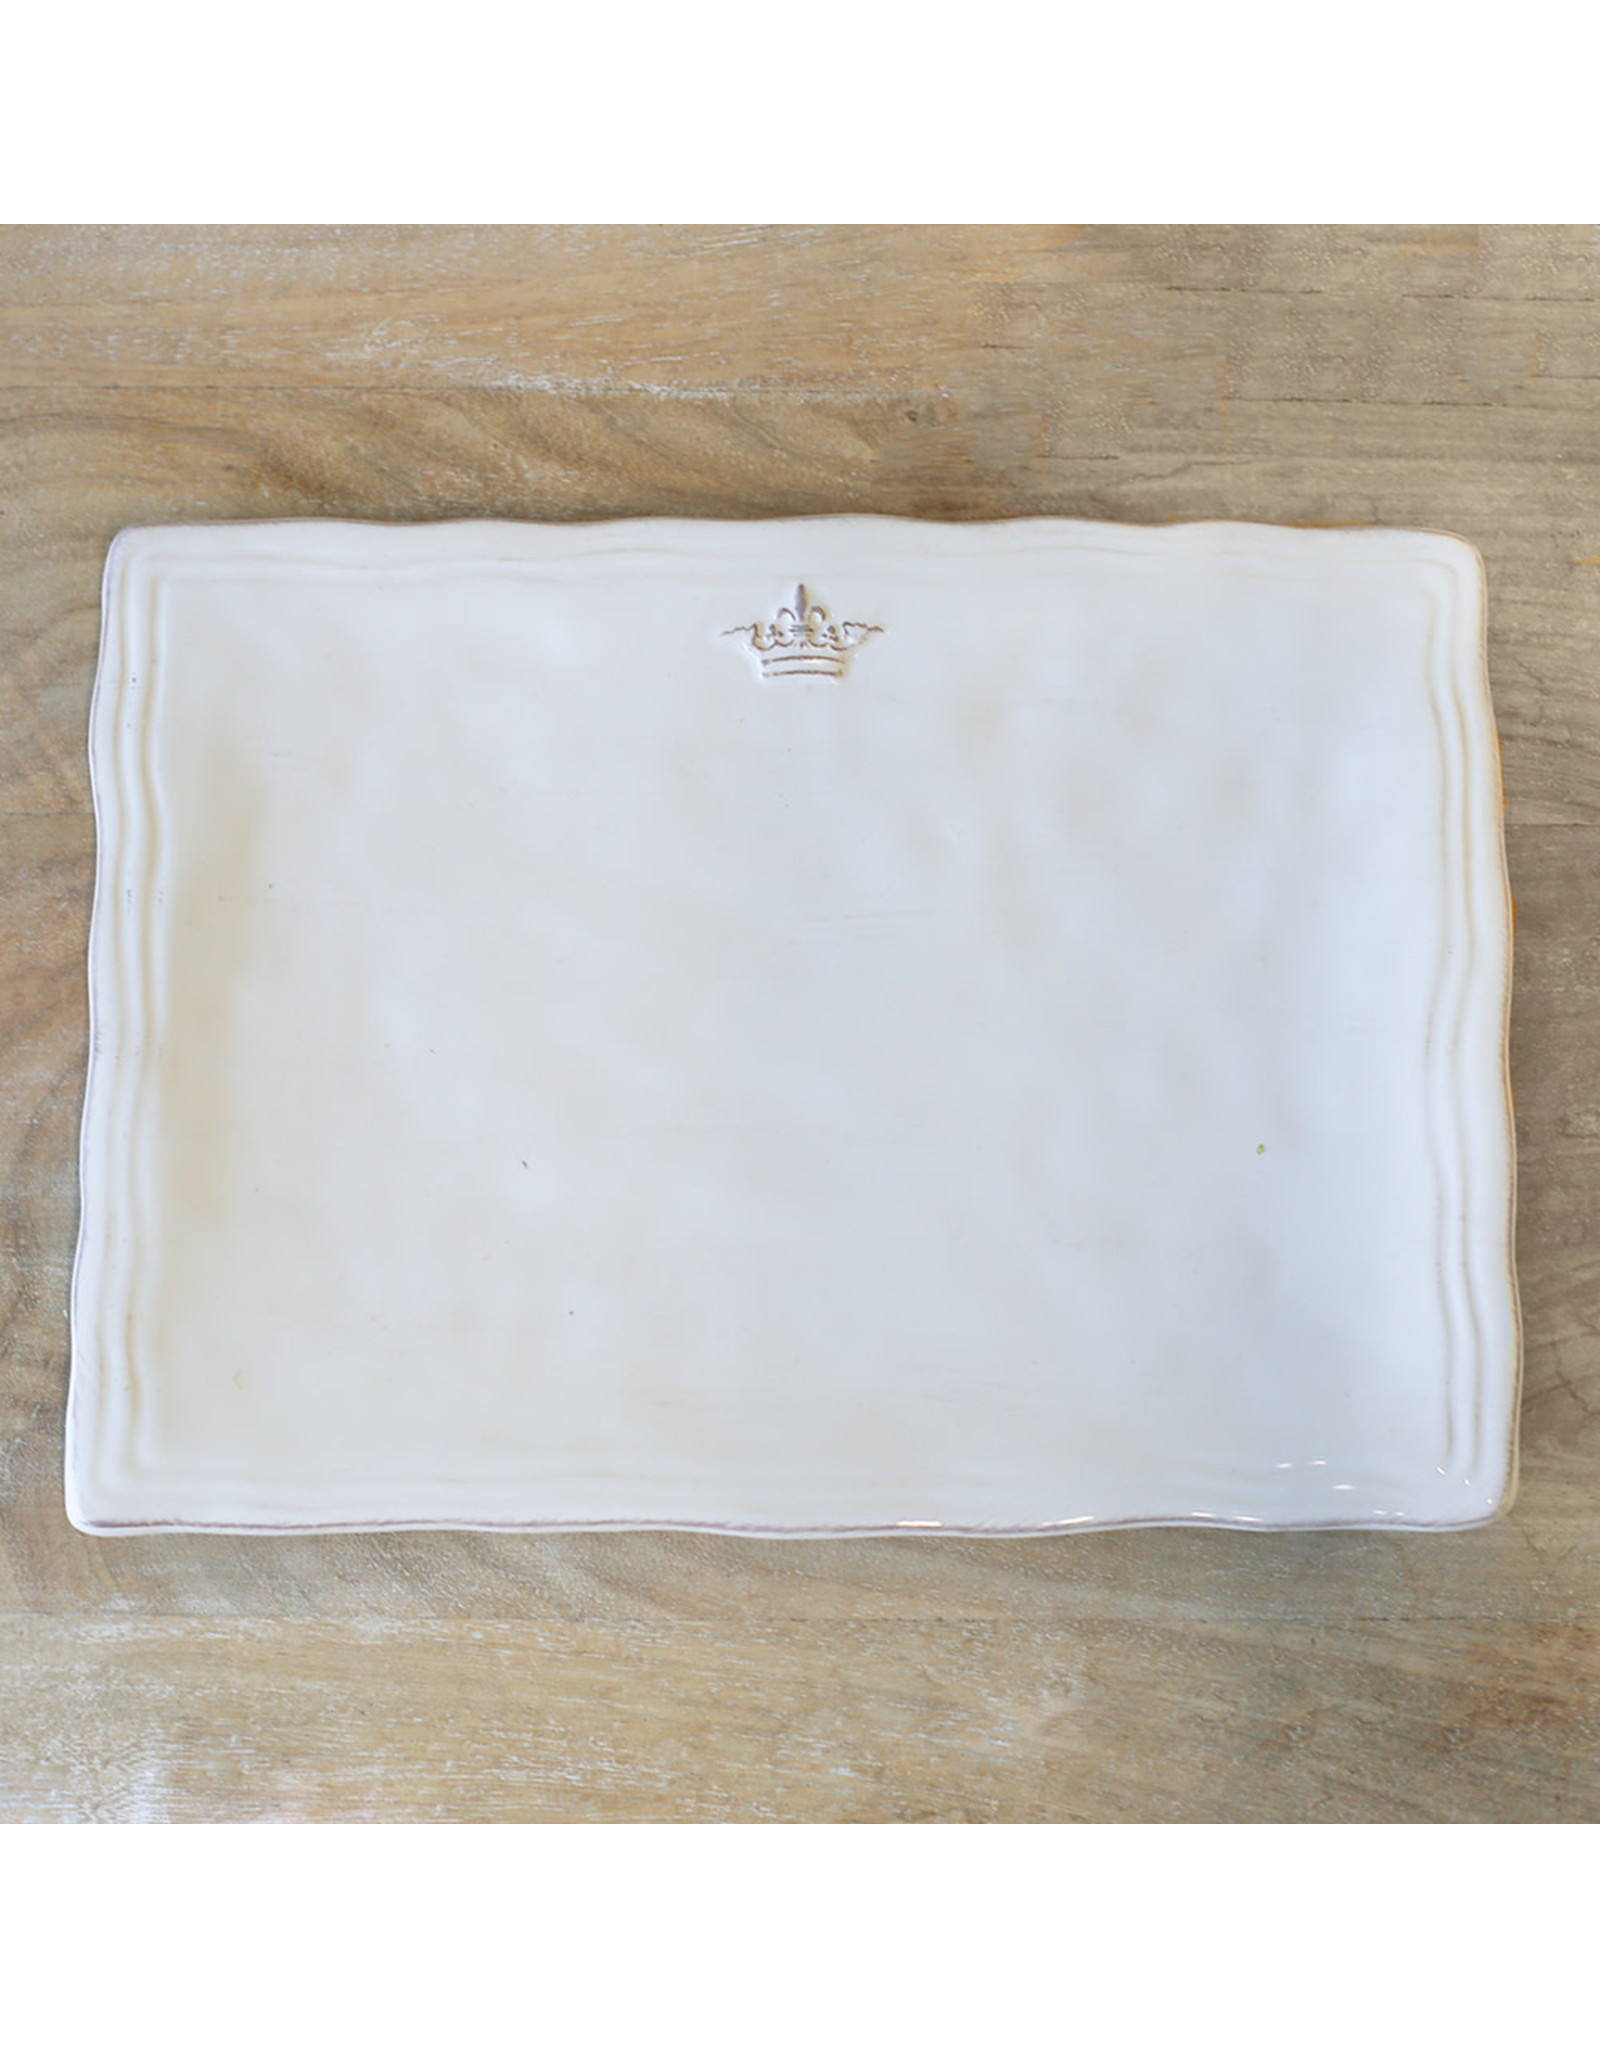 The Royal Standard Antique White Crown Platter,11.5x8.5